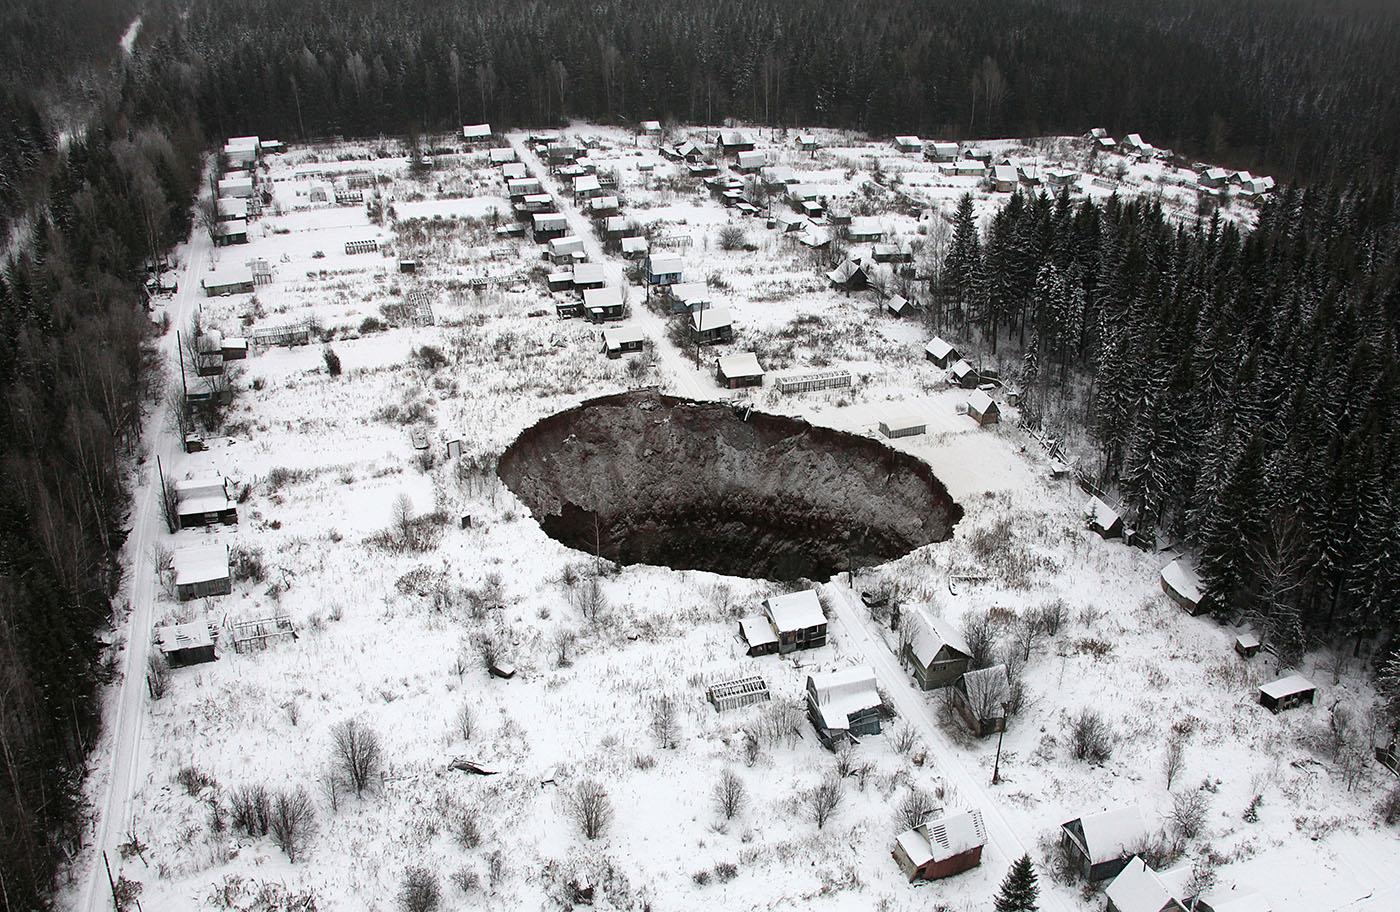 Sinkhole Found At Uralkali Mine In Russia's Solikamsk